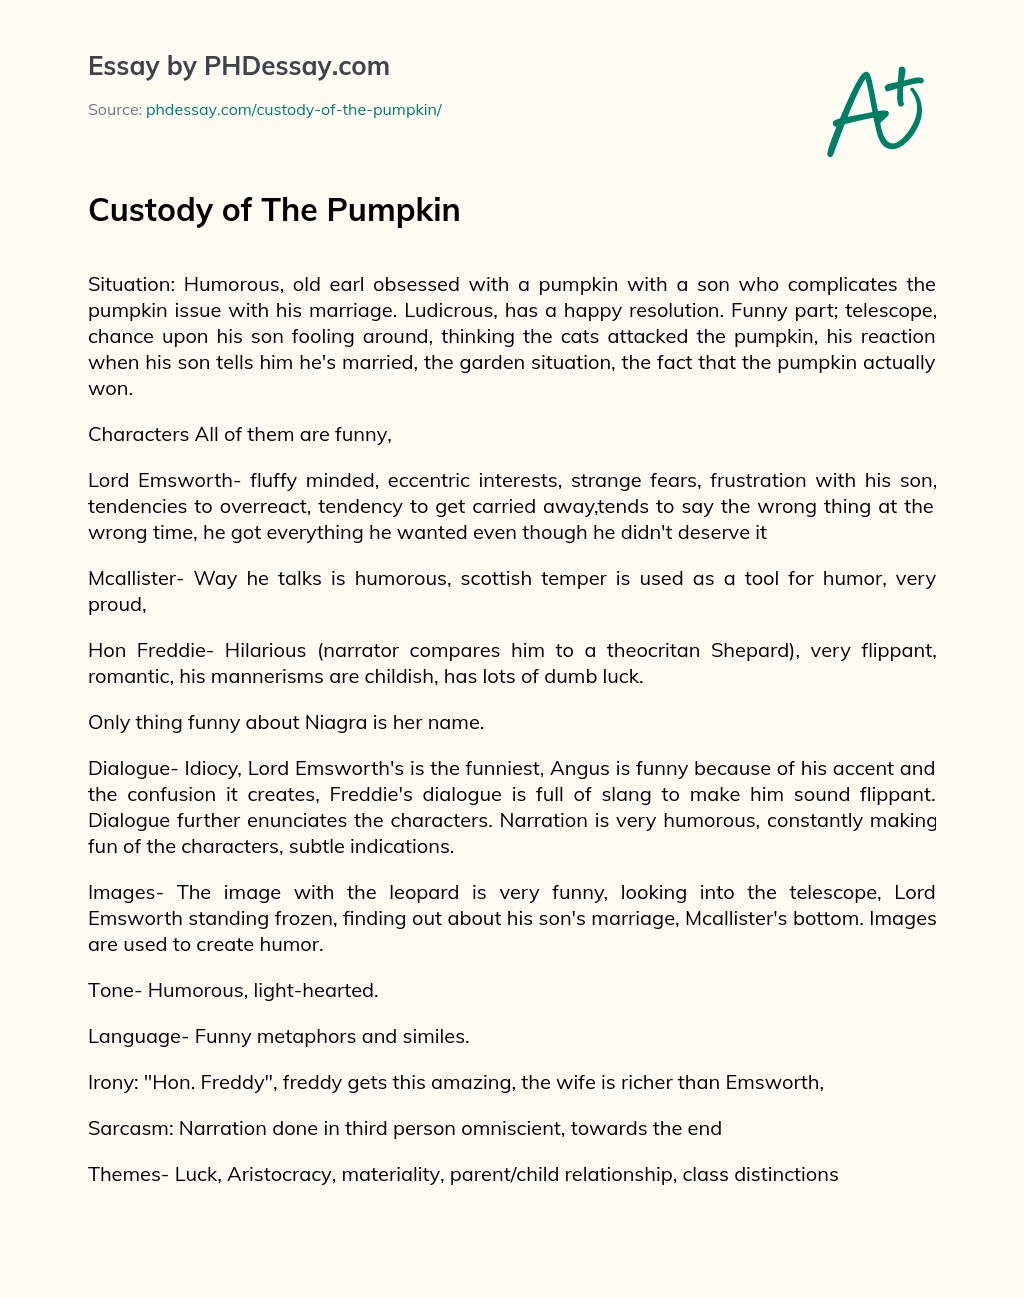 Custody of The Pumpkin essay